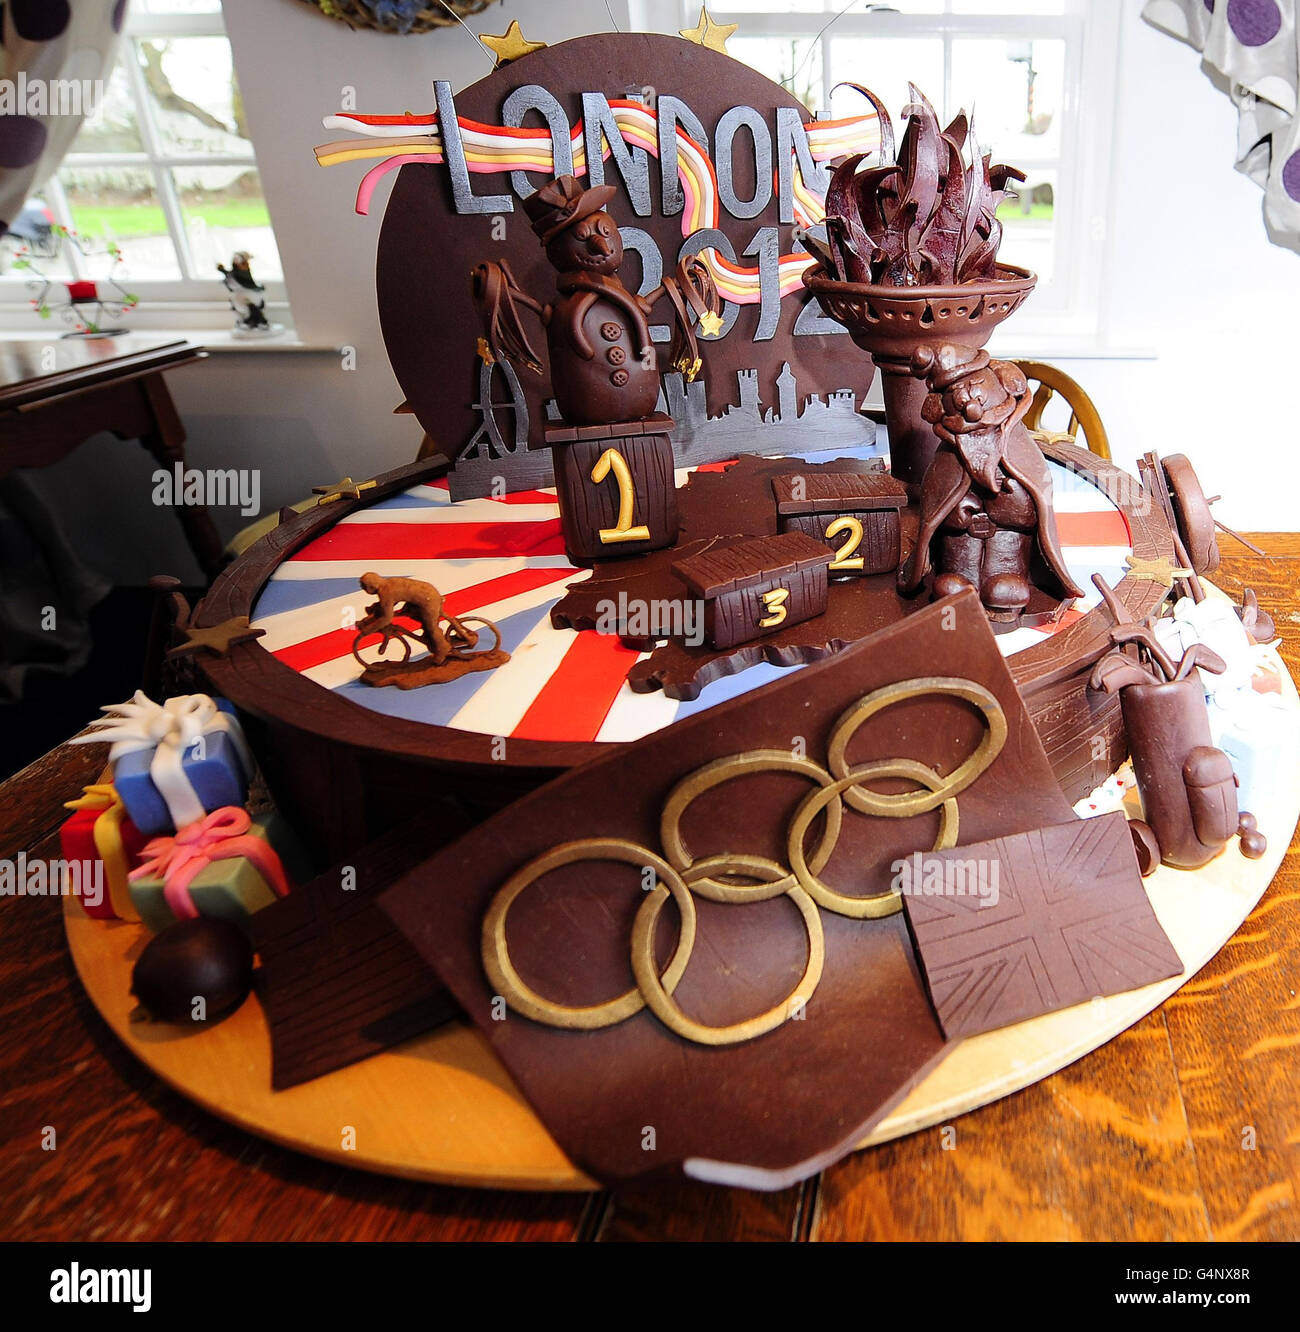 Olympics chocolate piece Stock Photo